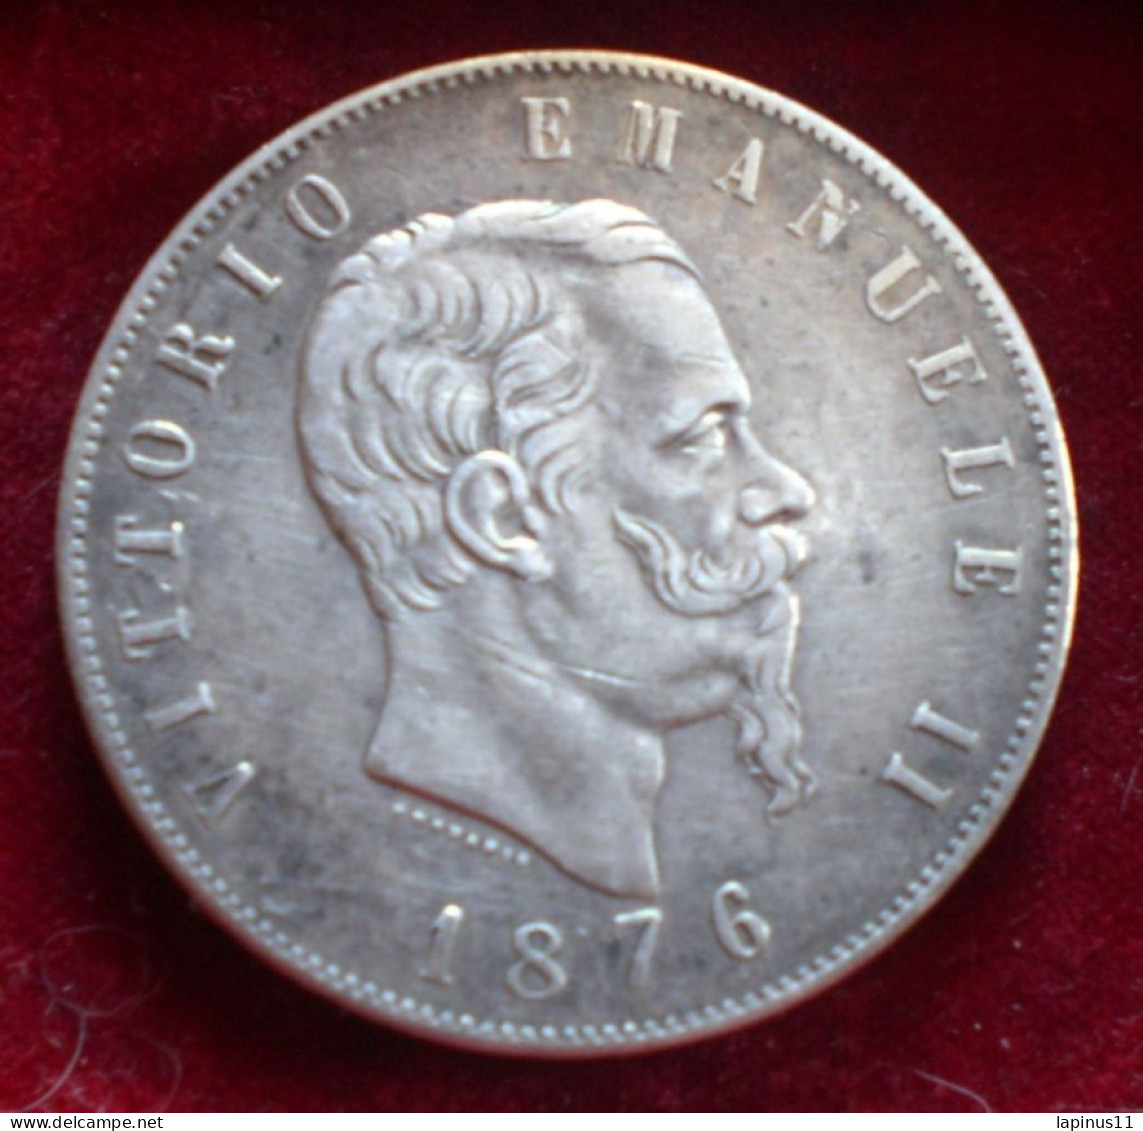 5 LIRE COIN VITTORIO EMANUELE II 1876 SILVER SILVER 25 Gr REF. TAGG. - 1900-1946 : Victor Emmanuel III & Umberto II